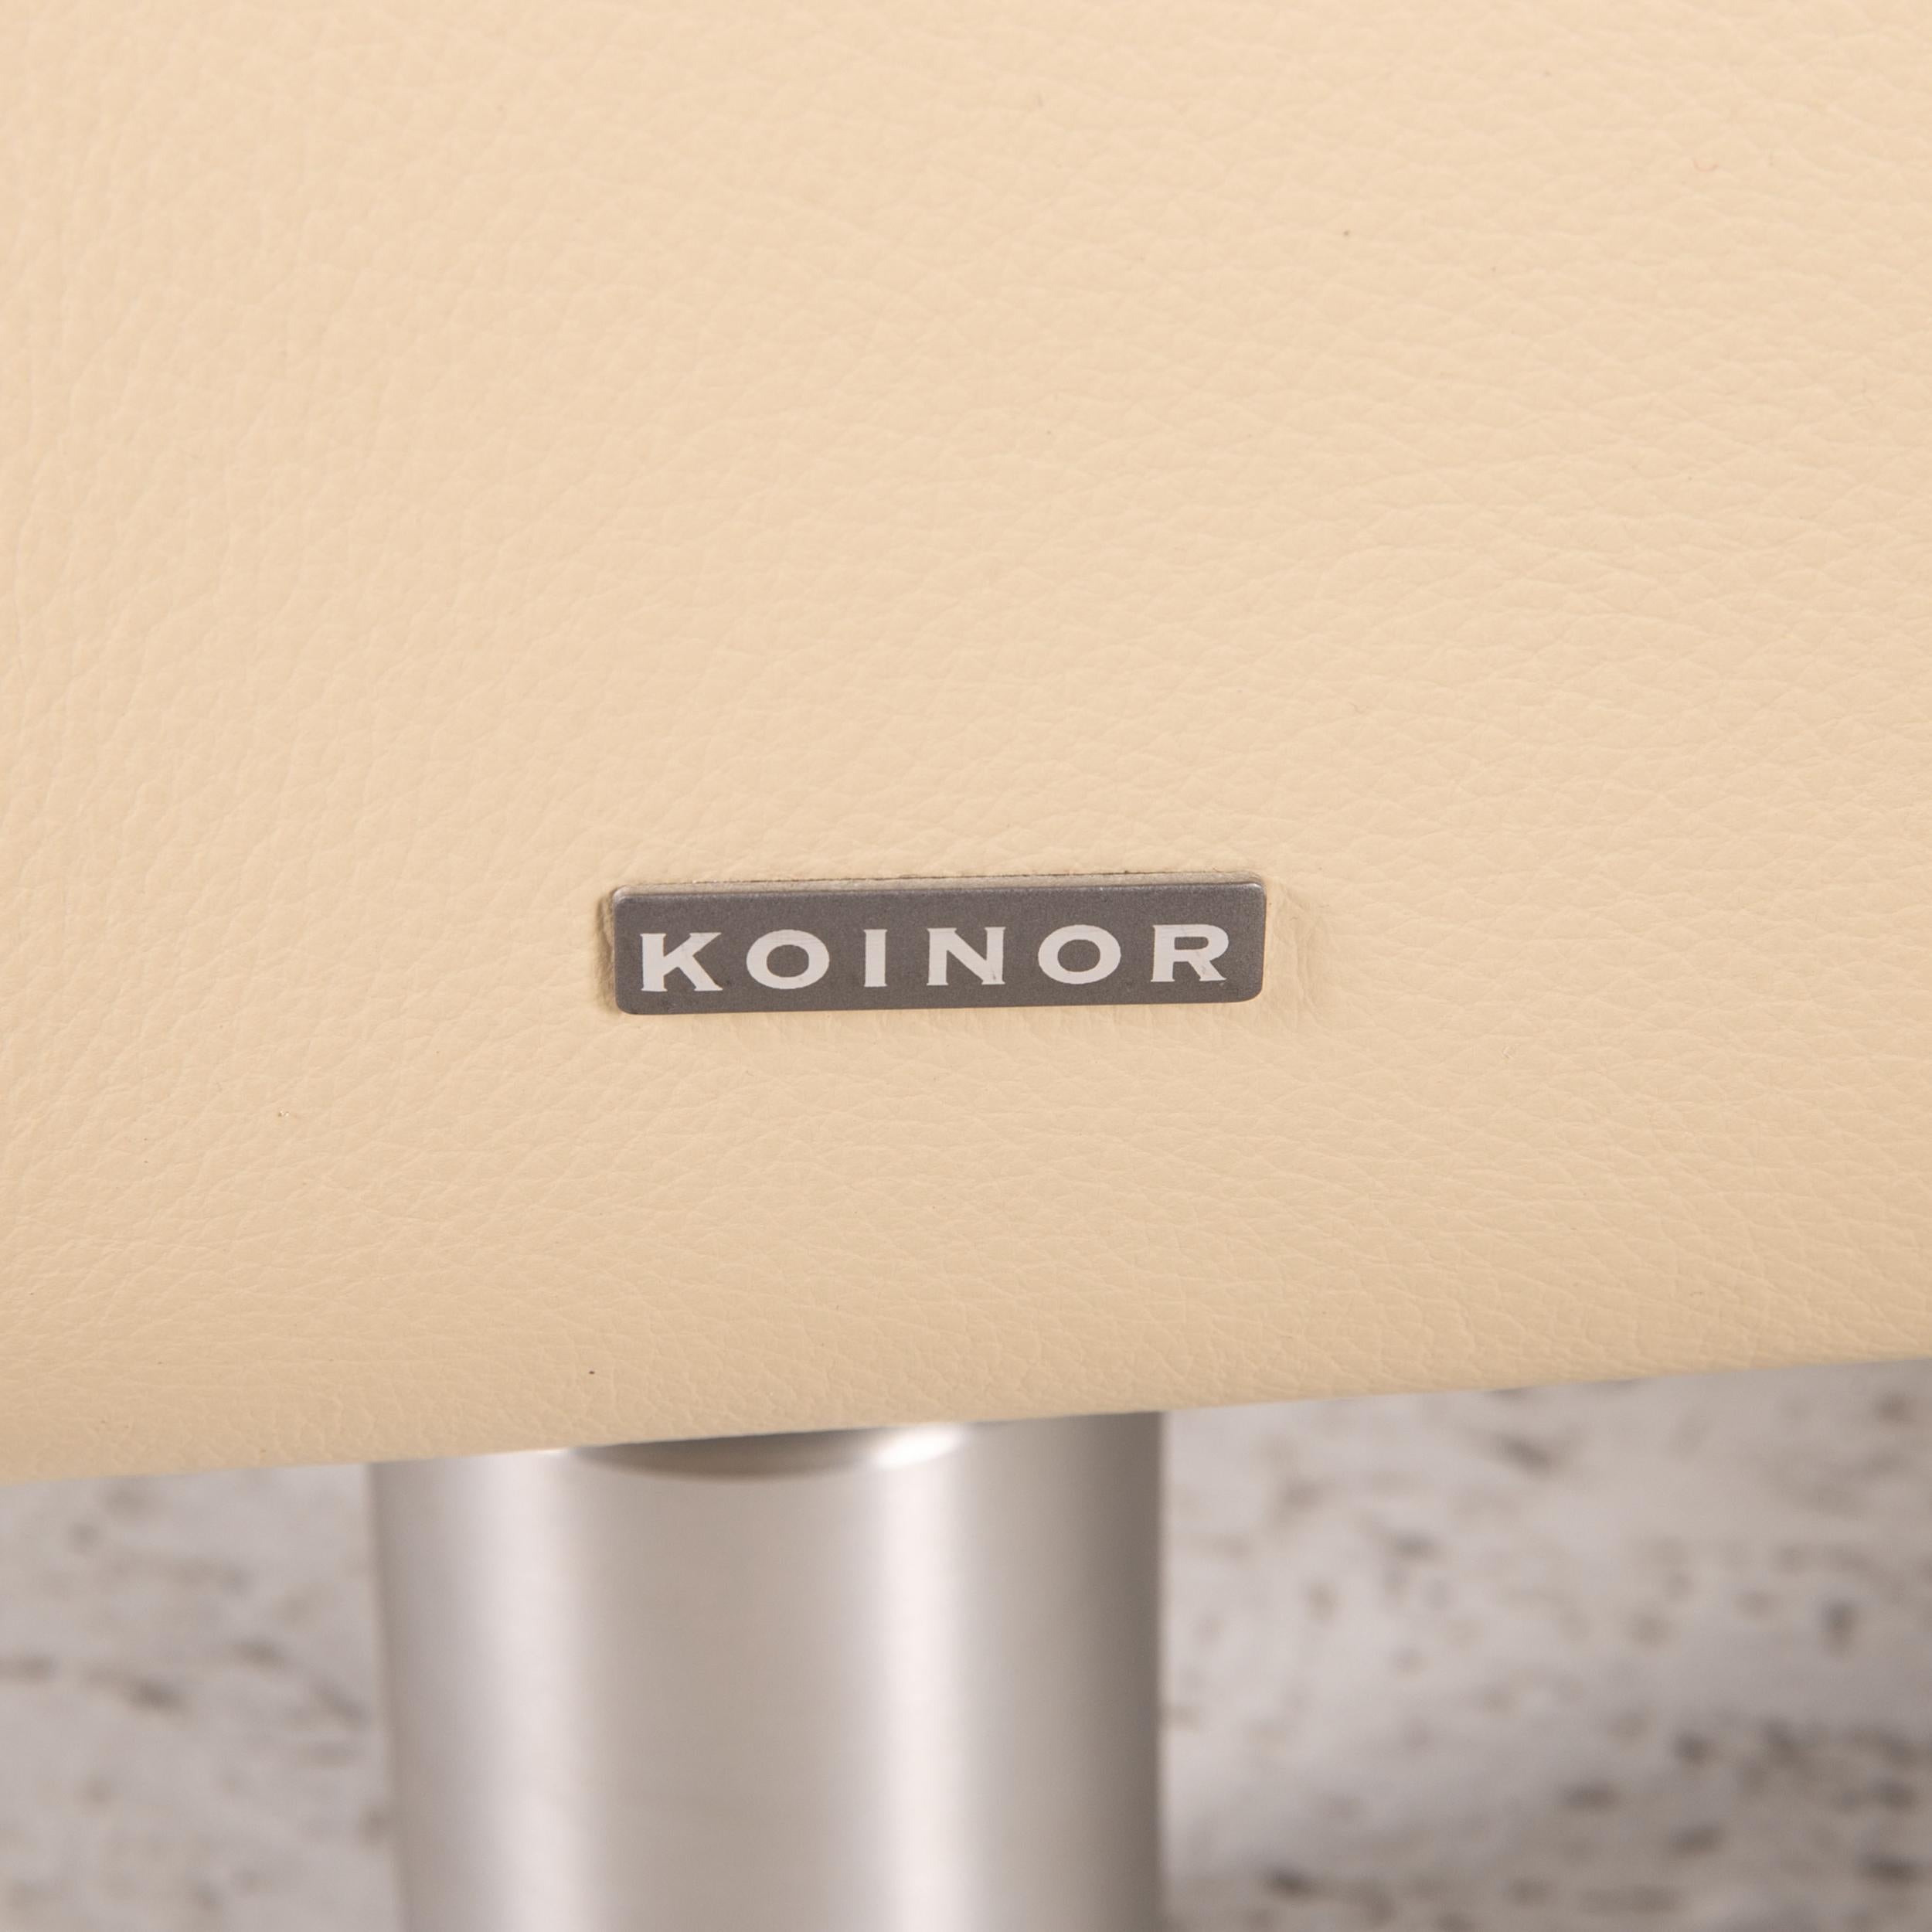 Koinor Rivoli leather sofa set cream 1x two-seater 1x stool function For Sale 3